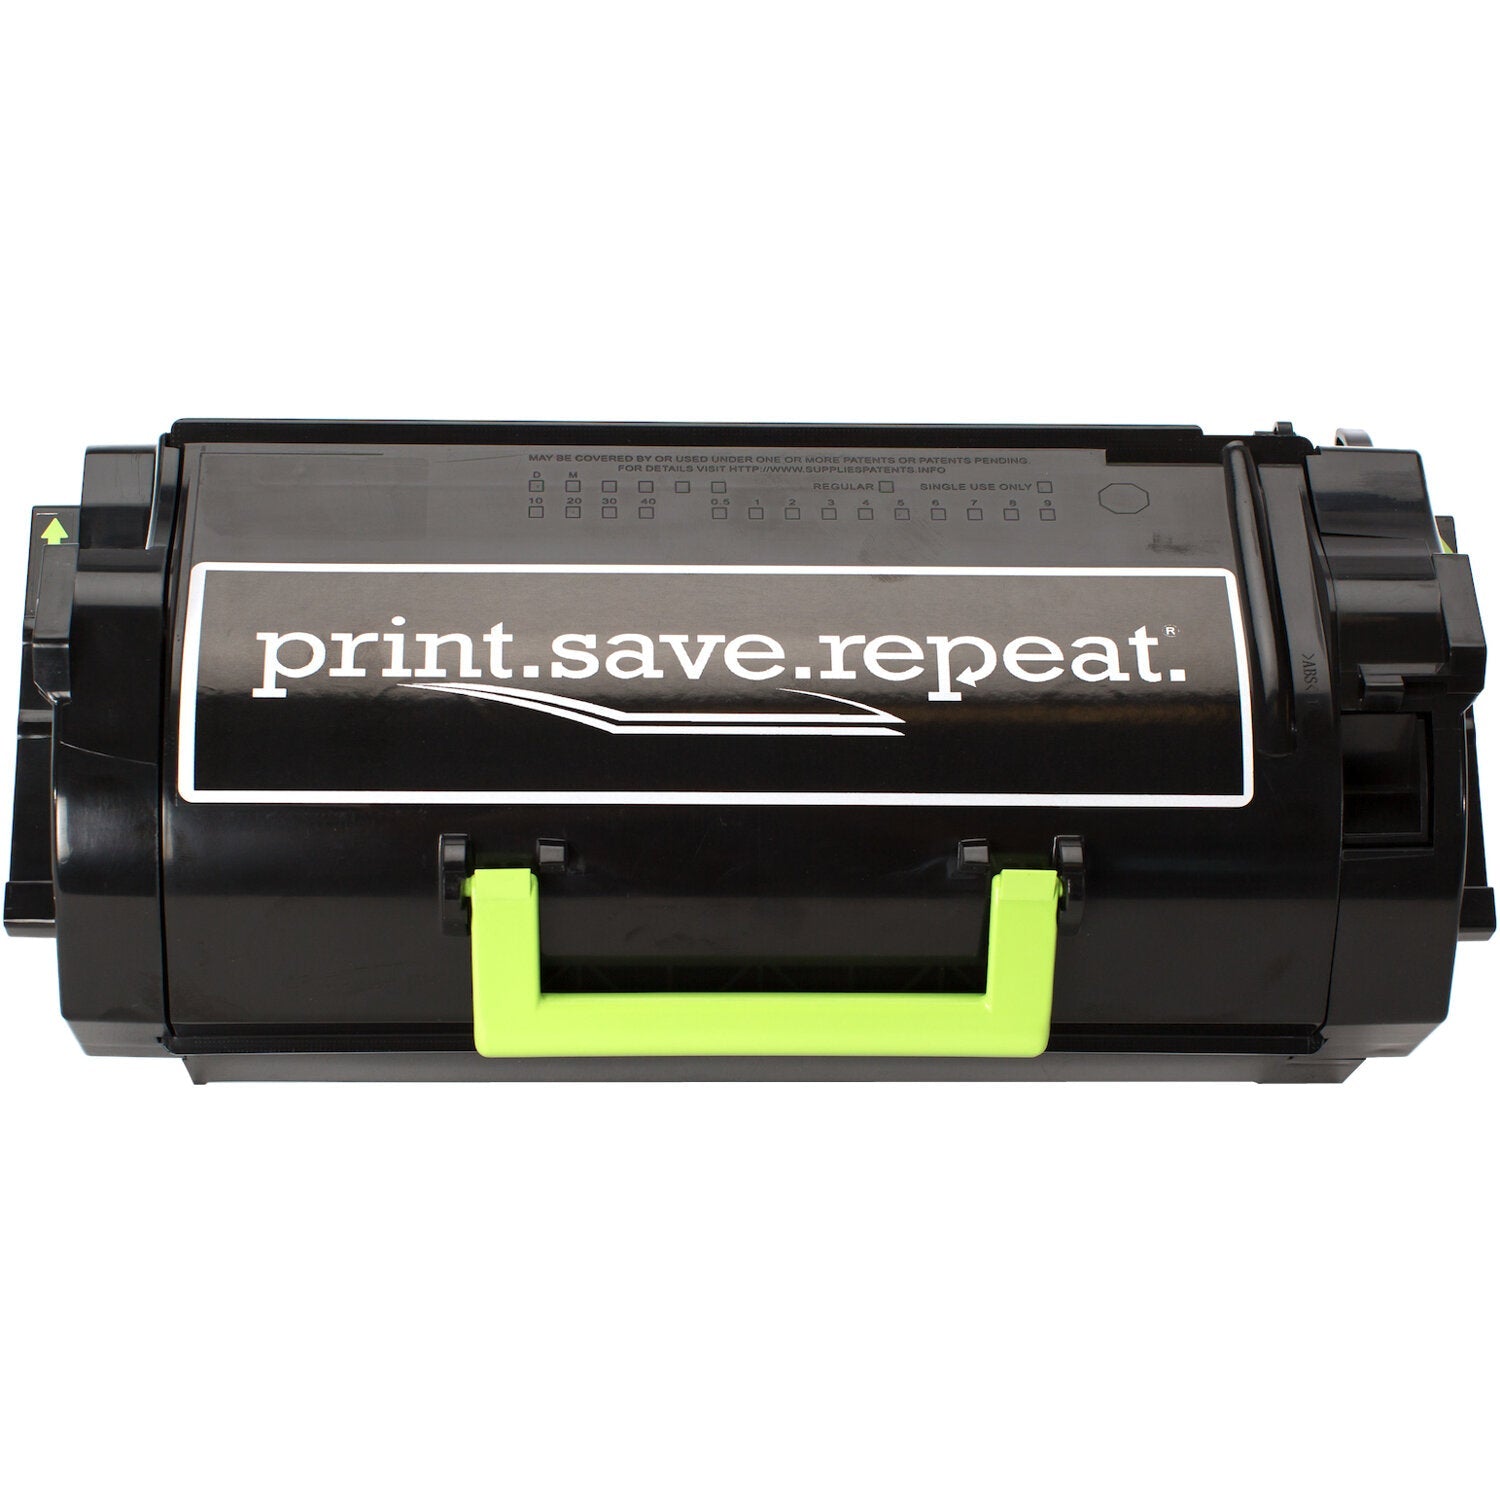 Print.Save.Repeat. Lexmark 621 Remanufactured Toner Cartridge (62D1000) for MX710, MX711, MX810, MX811, MX812 [6,000 Pages]